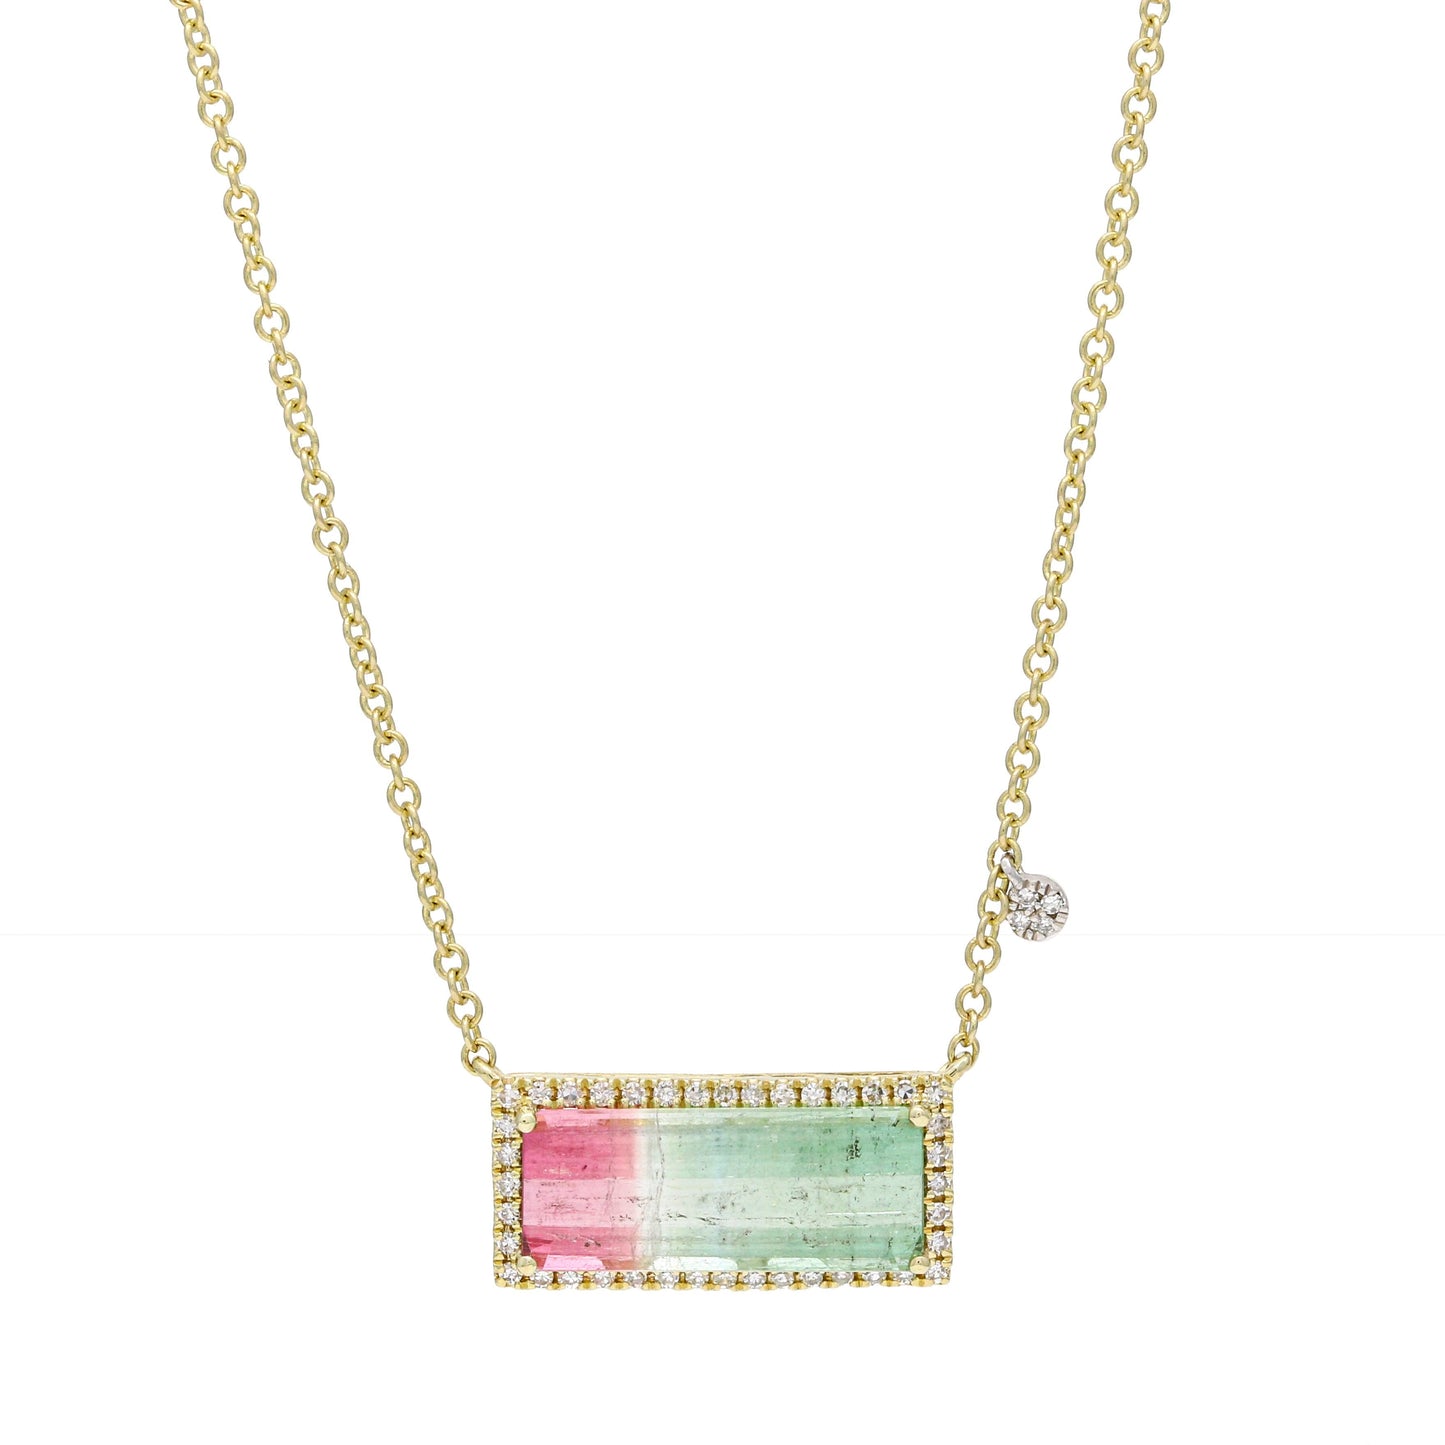 Meira T Watermelon Tourmaline Diamond Necklace in 14k Yellow Gold - 31 Jewels Inc.